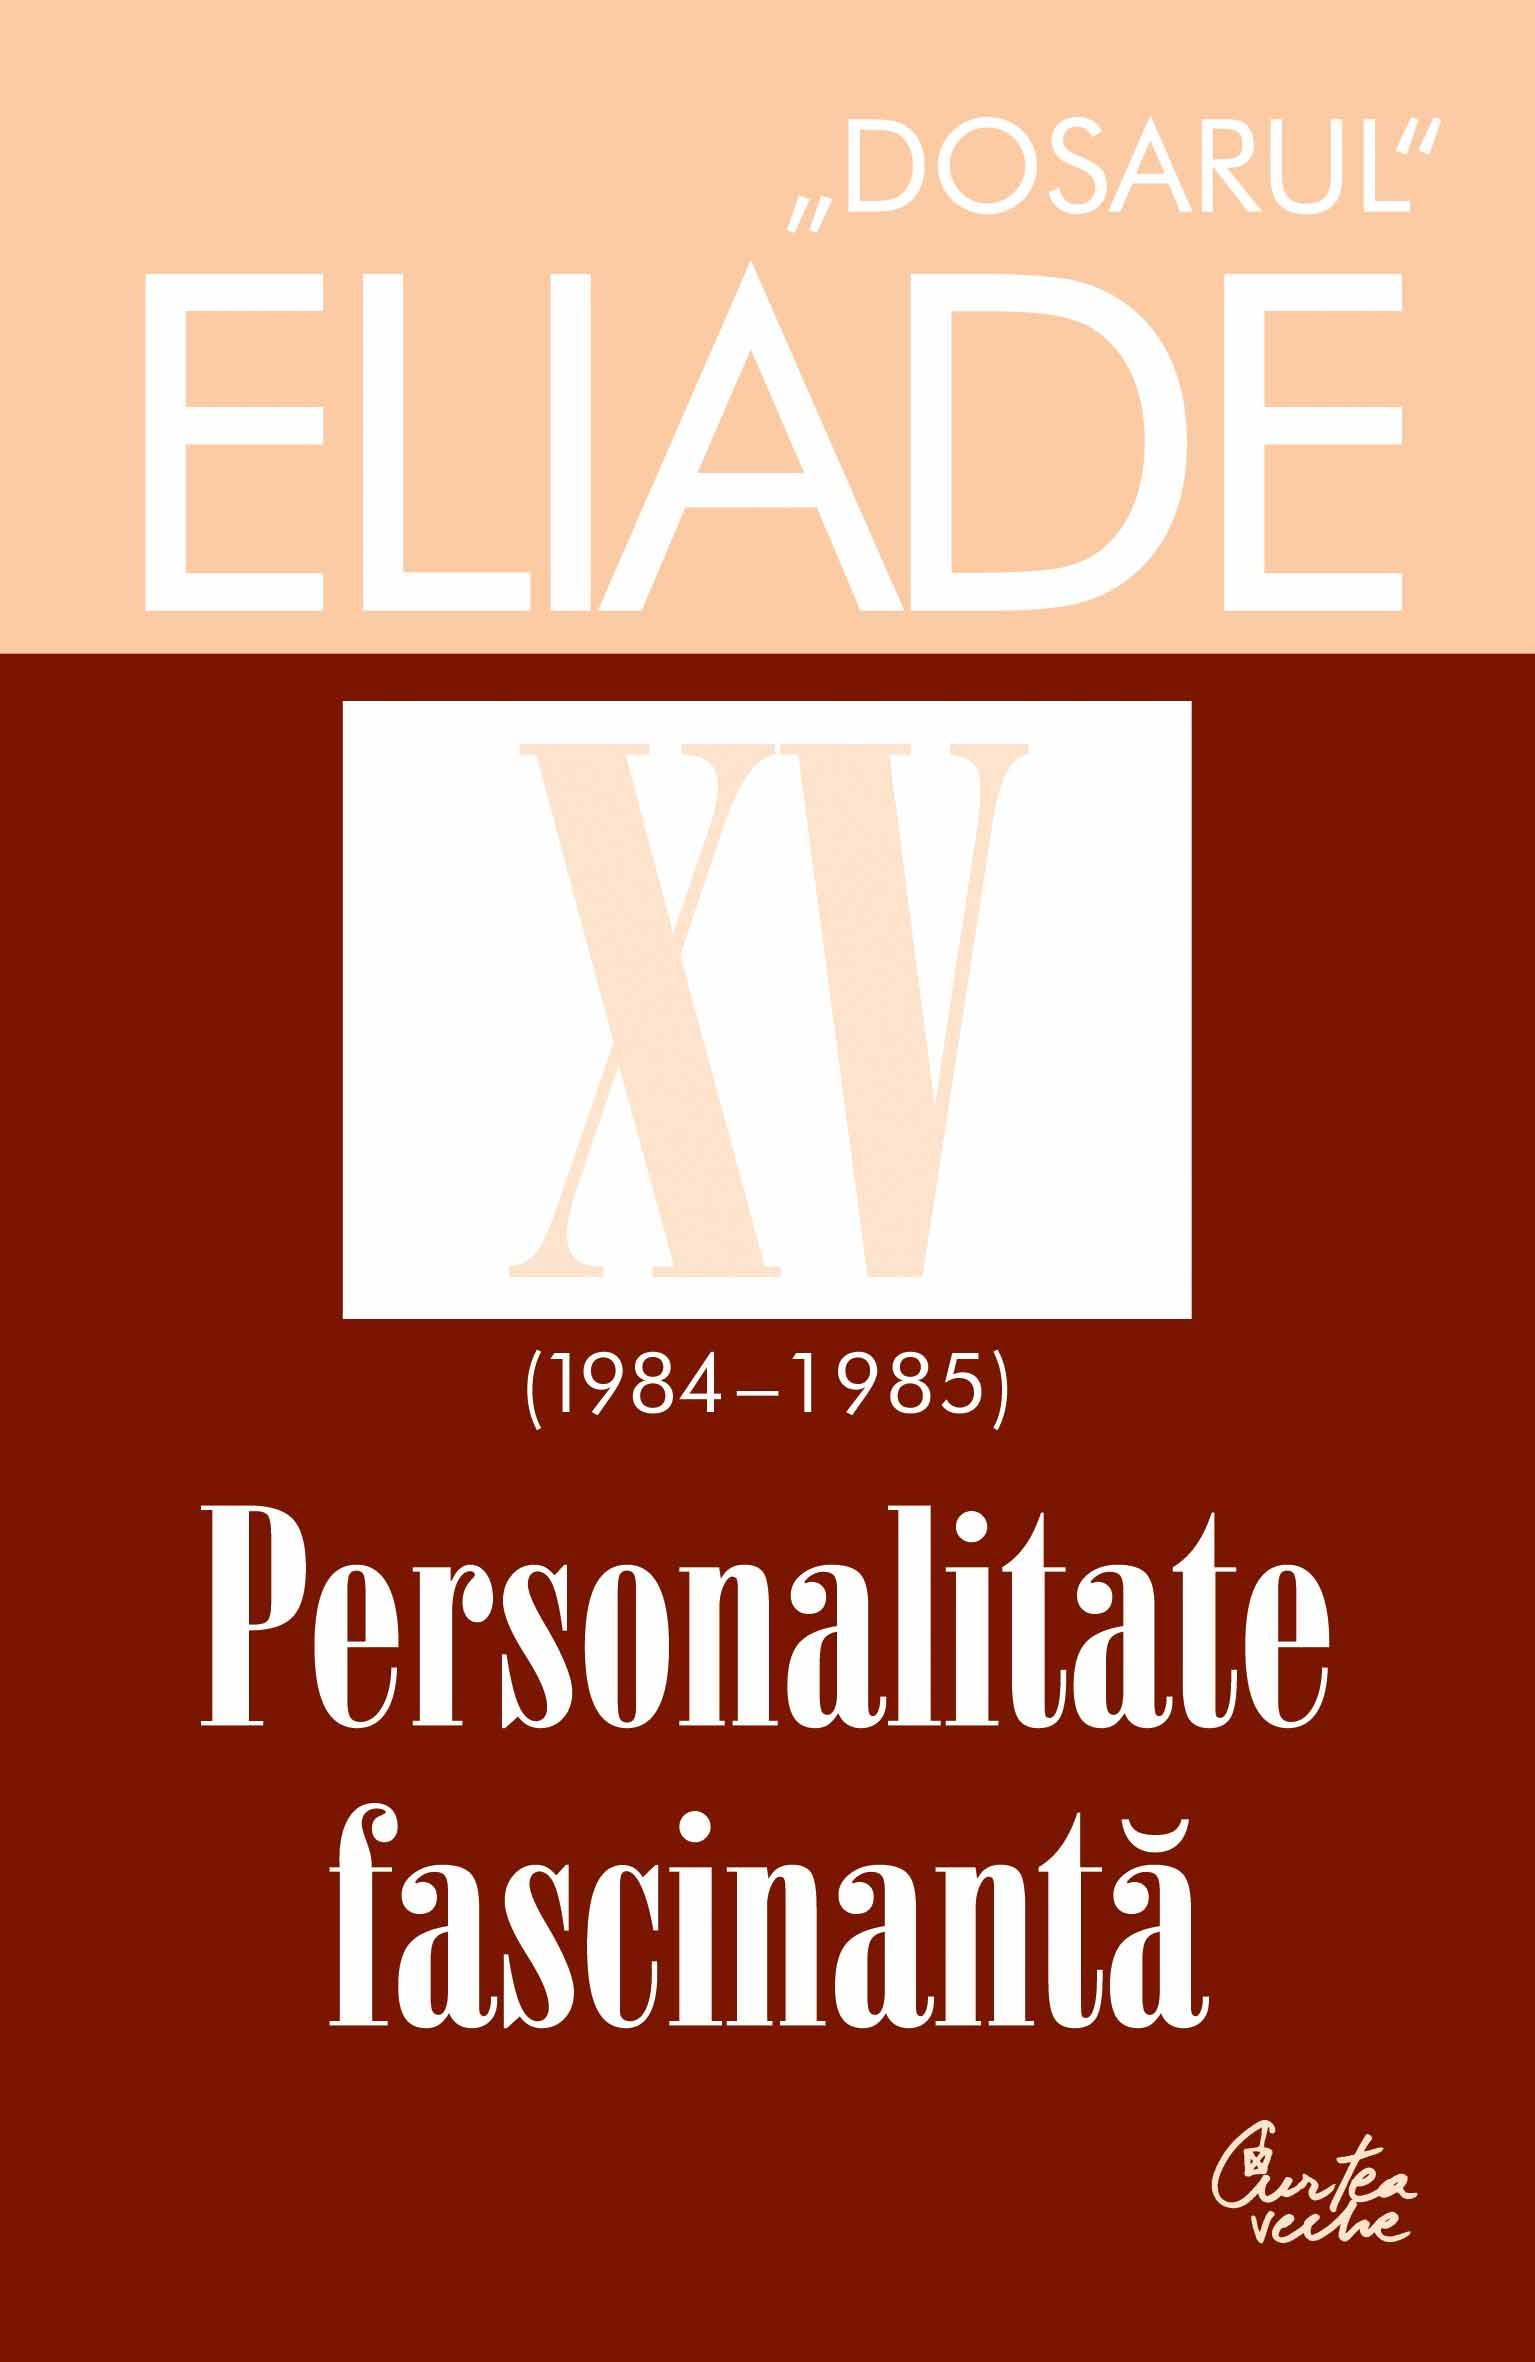 Dosarul Eliade XV (1984-1985). Personalitate fasinantă